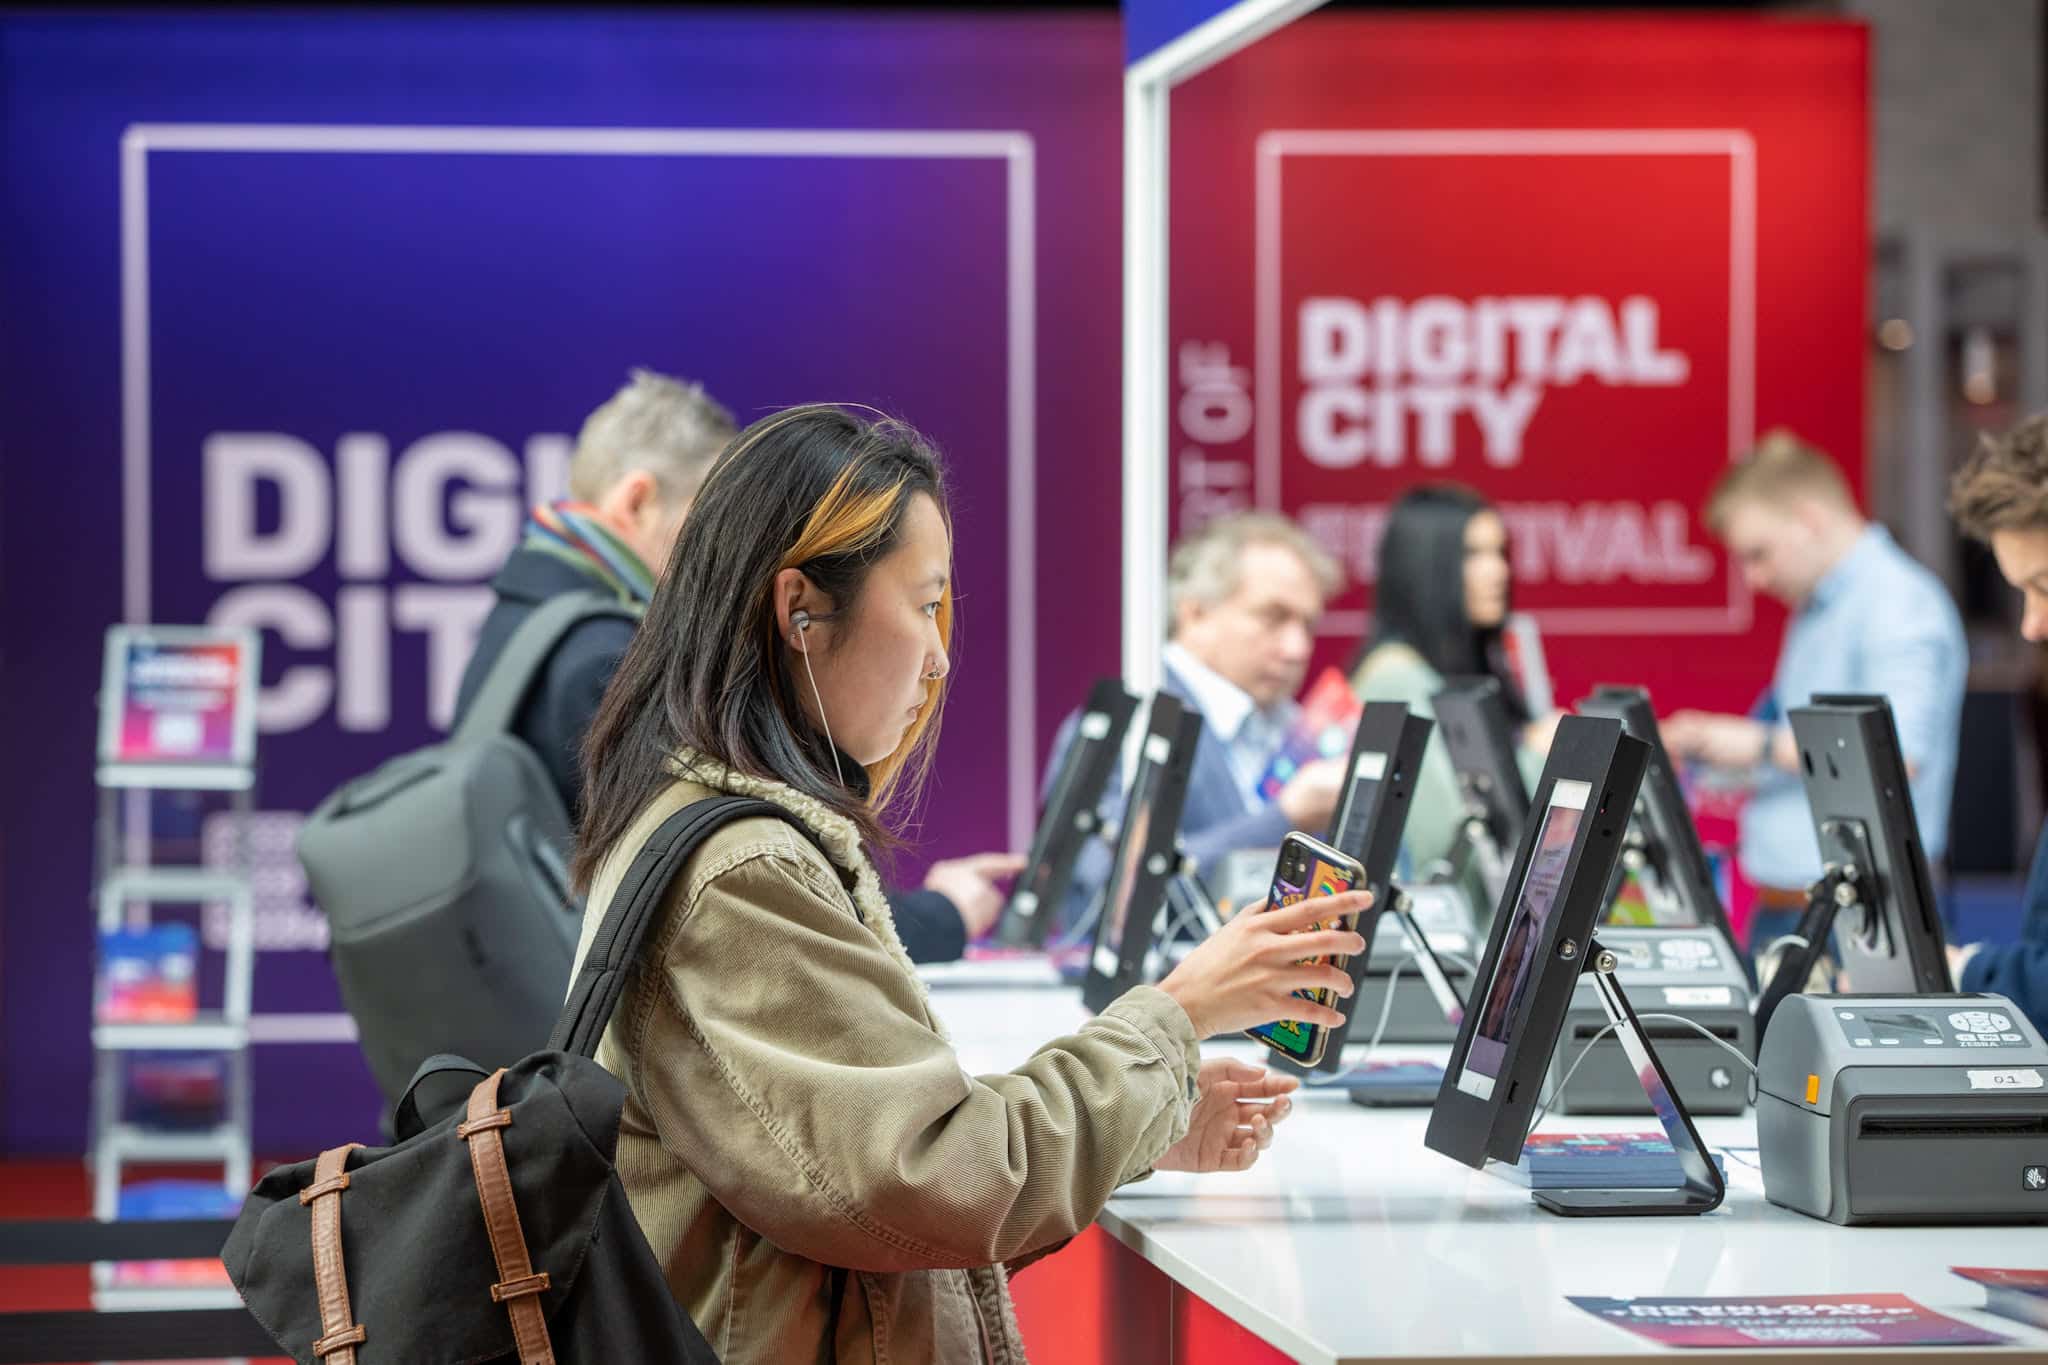 Digital City Expo 2022